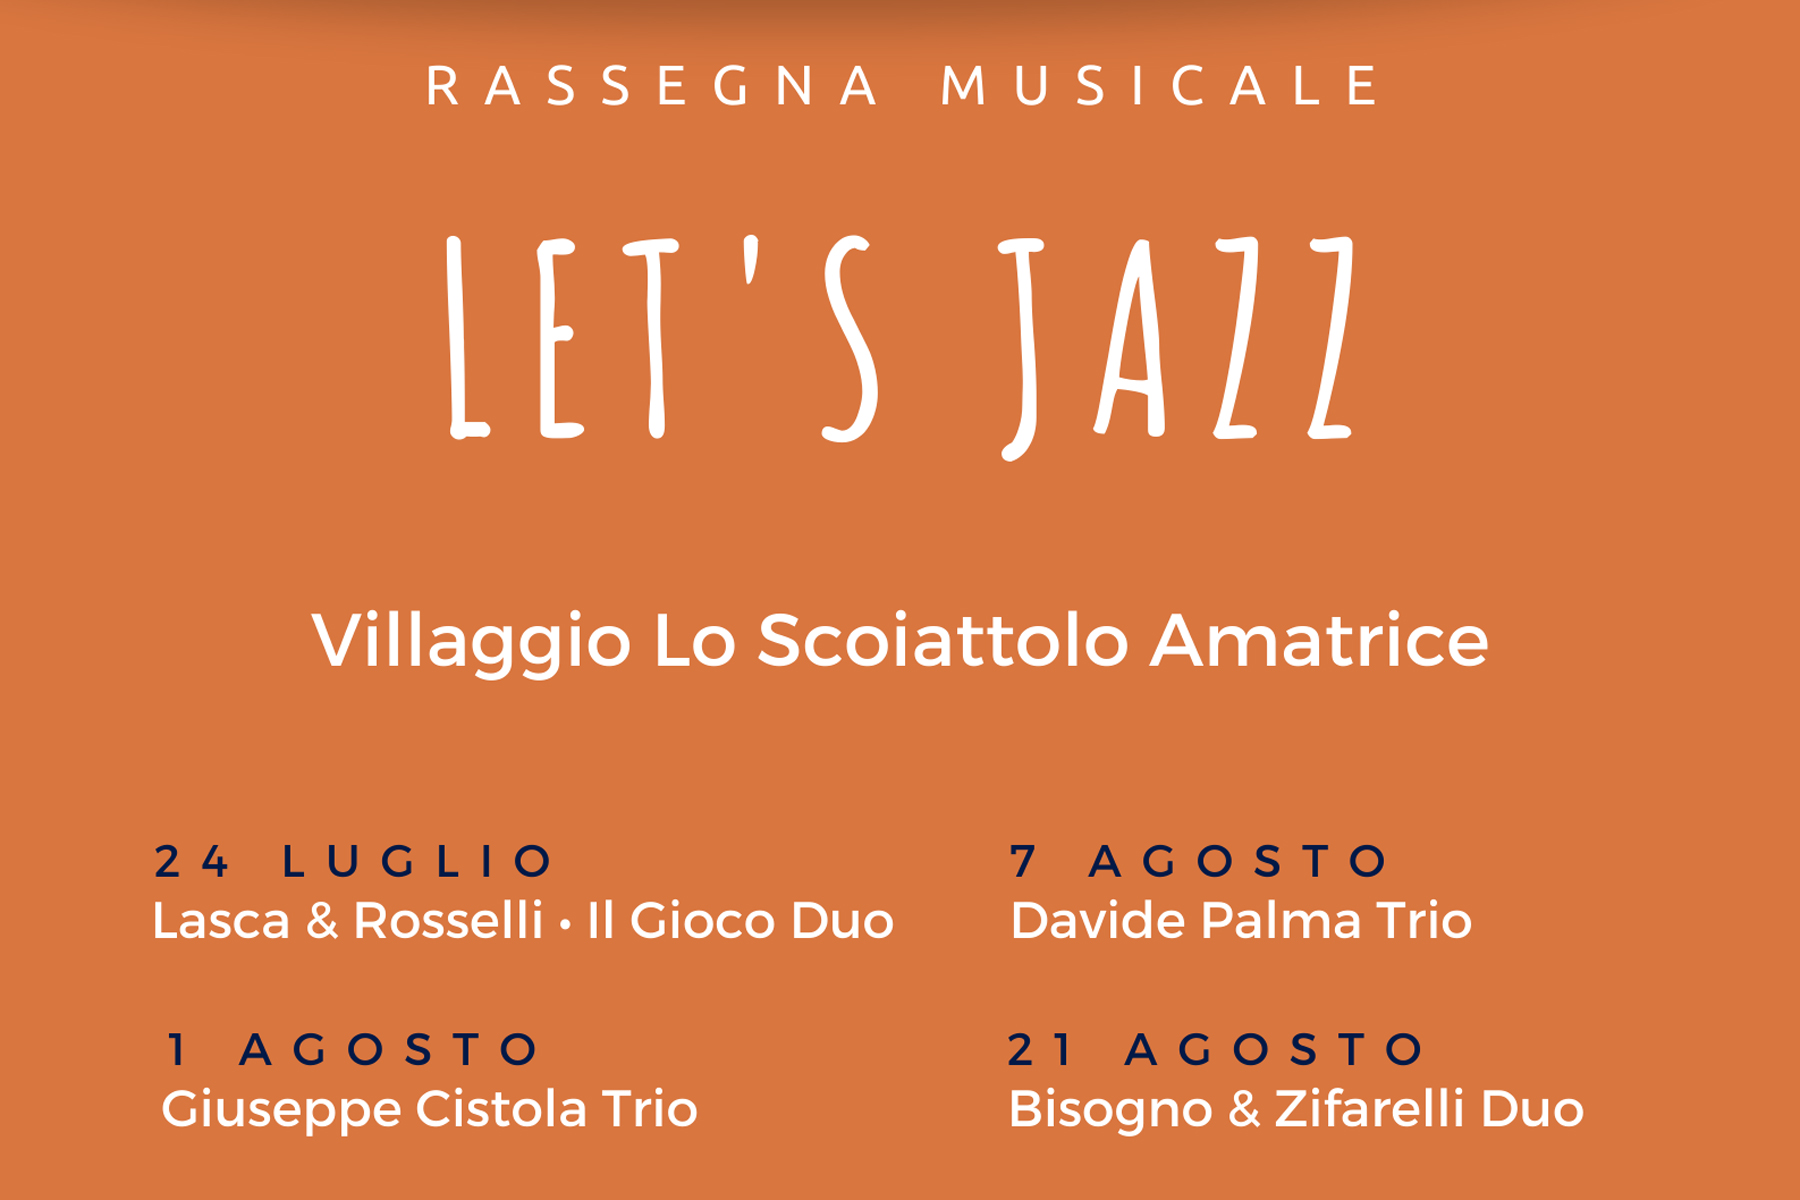 Let’s Jazz / Bisogno & Zifarelli Duo